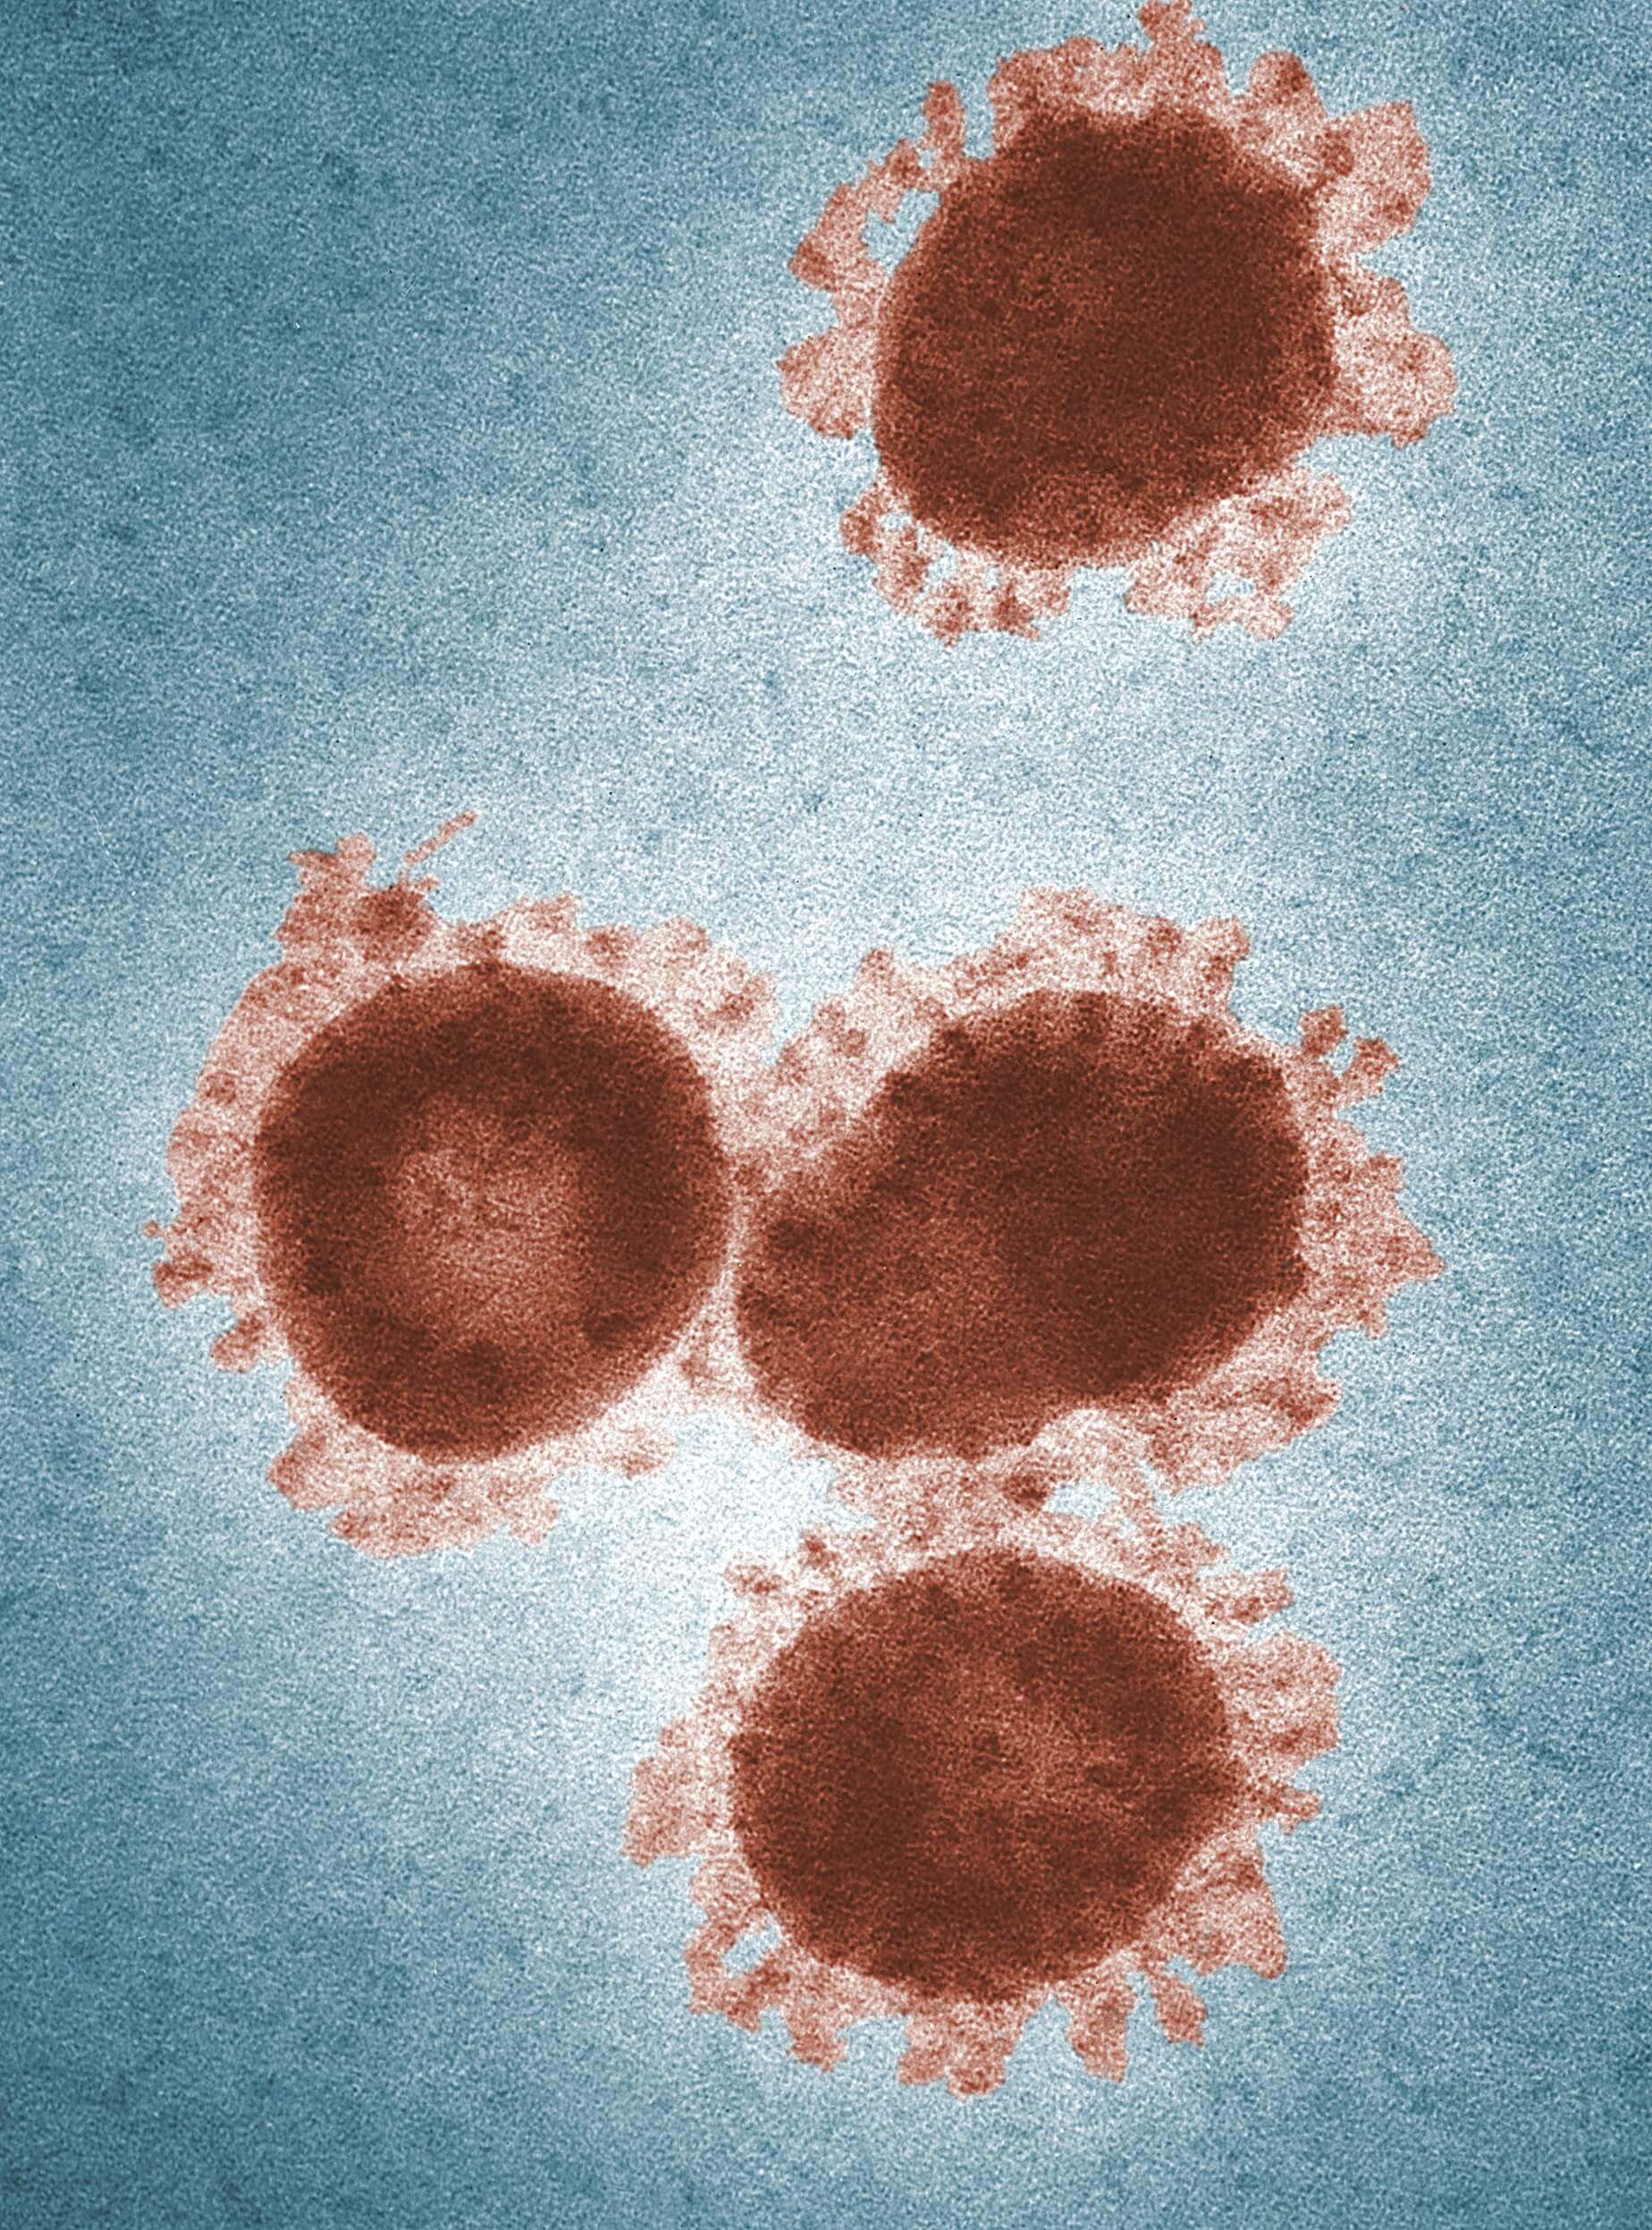 Closeup of Cells